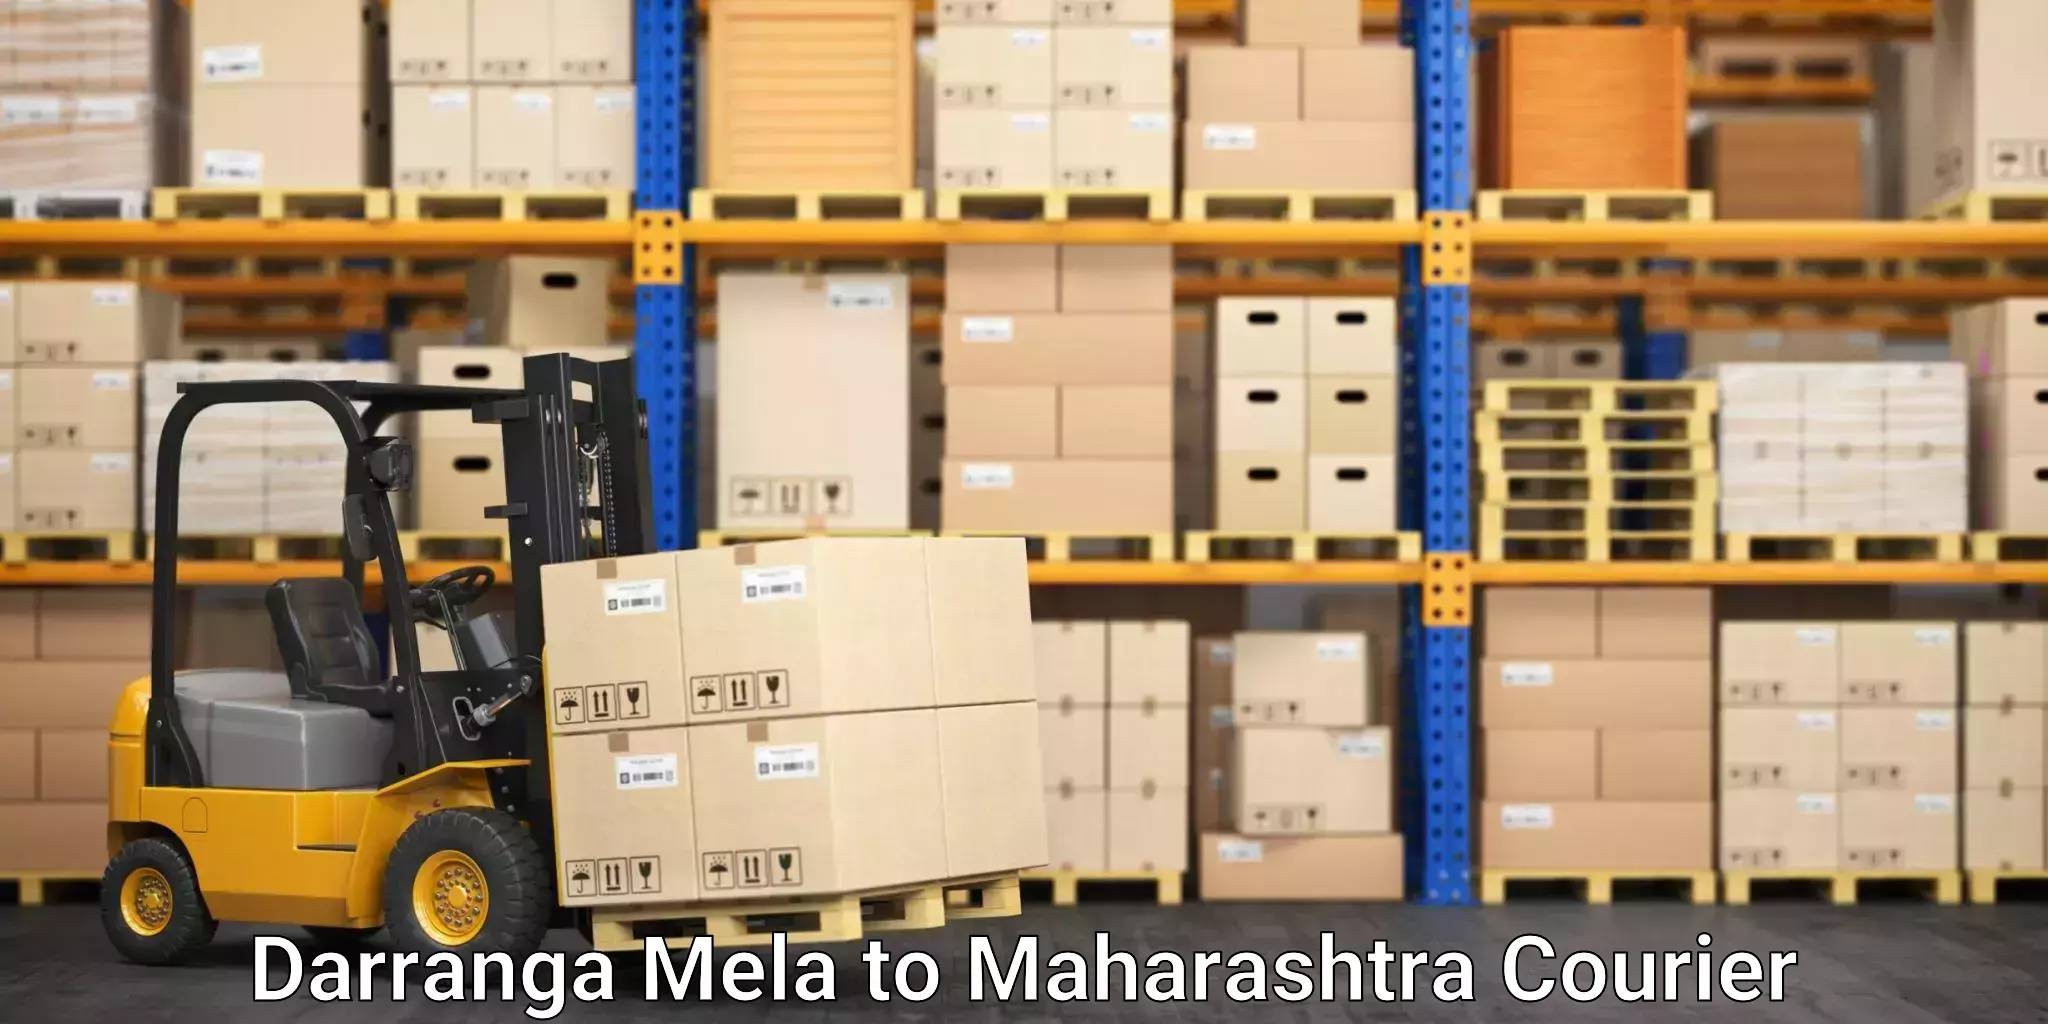 Affordable shipping rates Darranga Mela to Waranga Phata